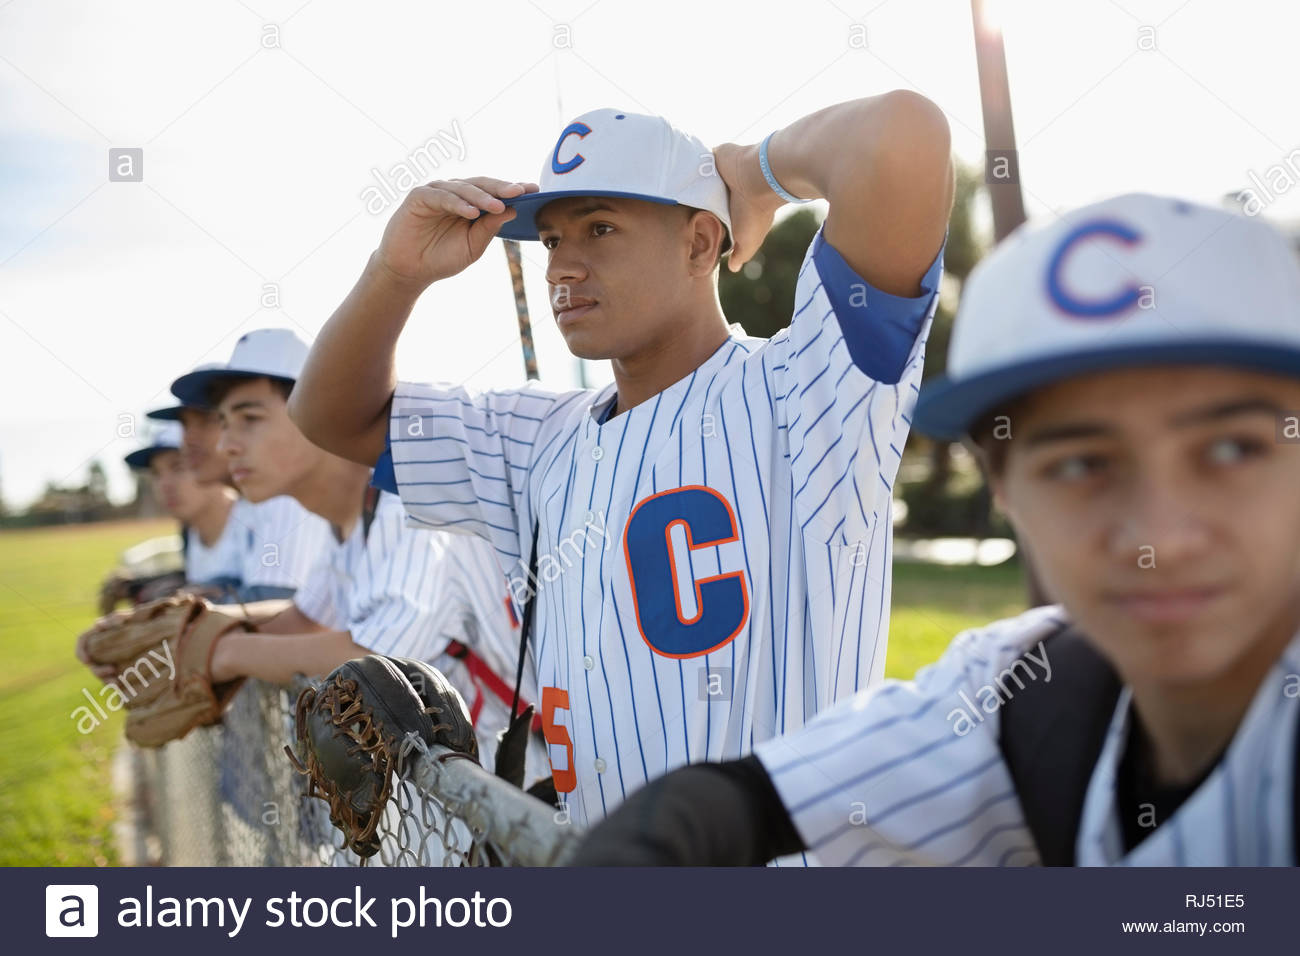 Determined baseball player adjusting hat Stock Photo